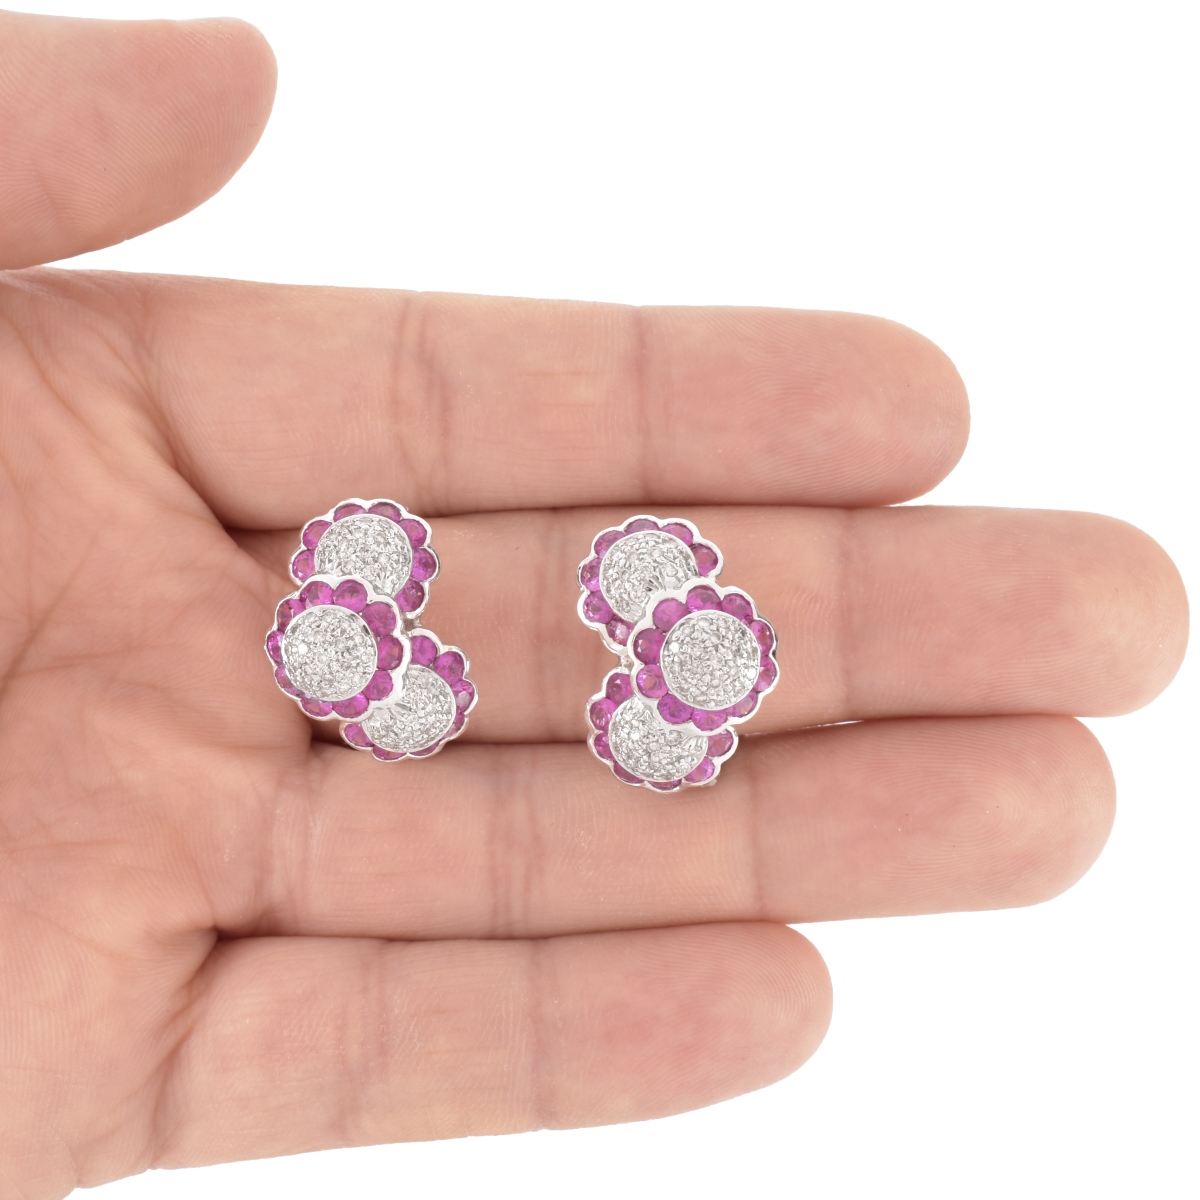 Pink Sapphire, Diamond and 18K Earrings